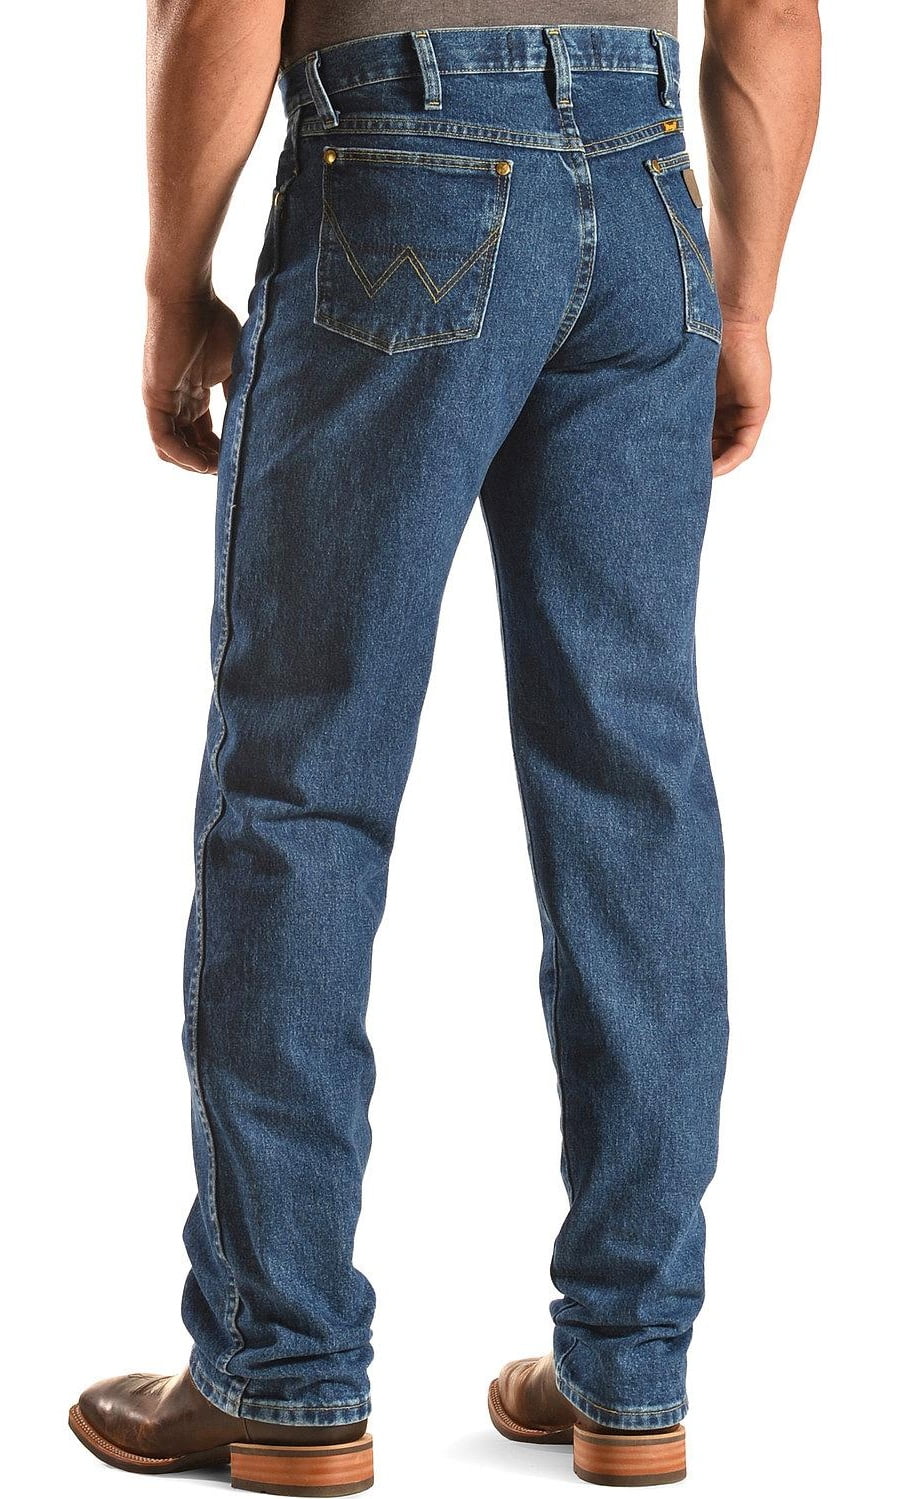 george strait jeans